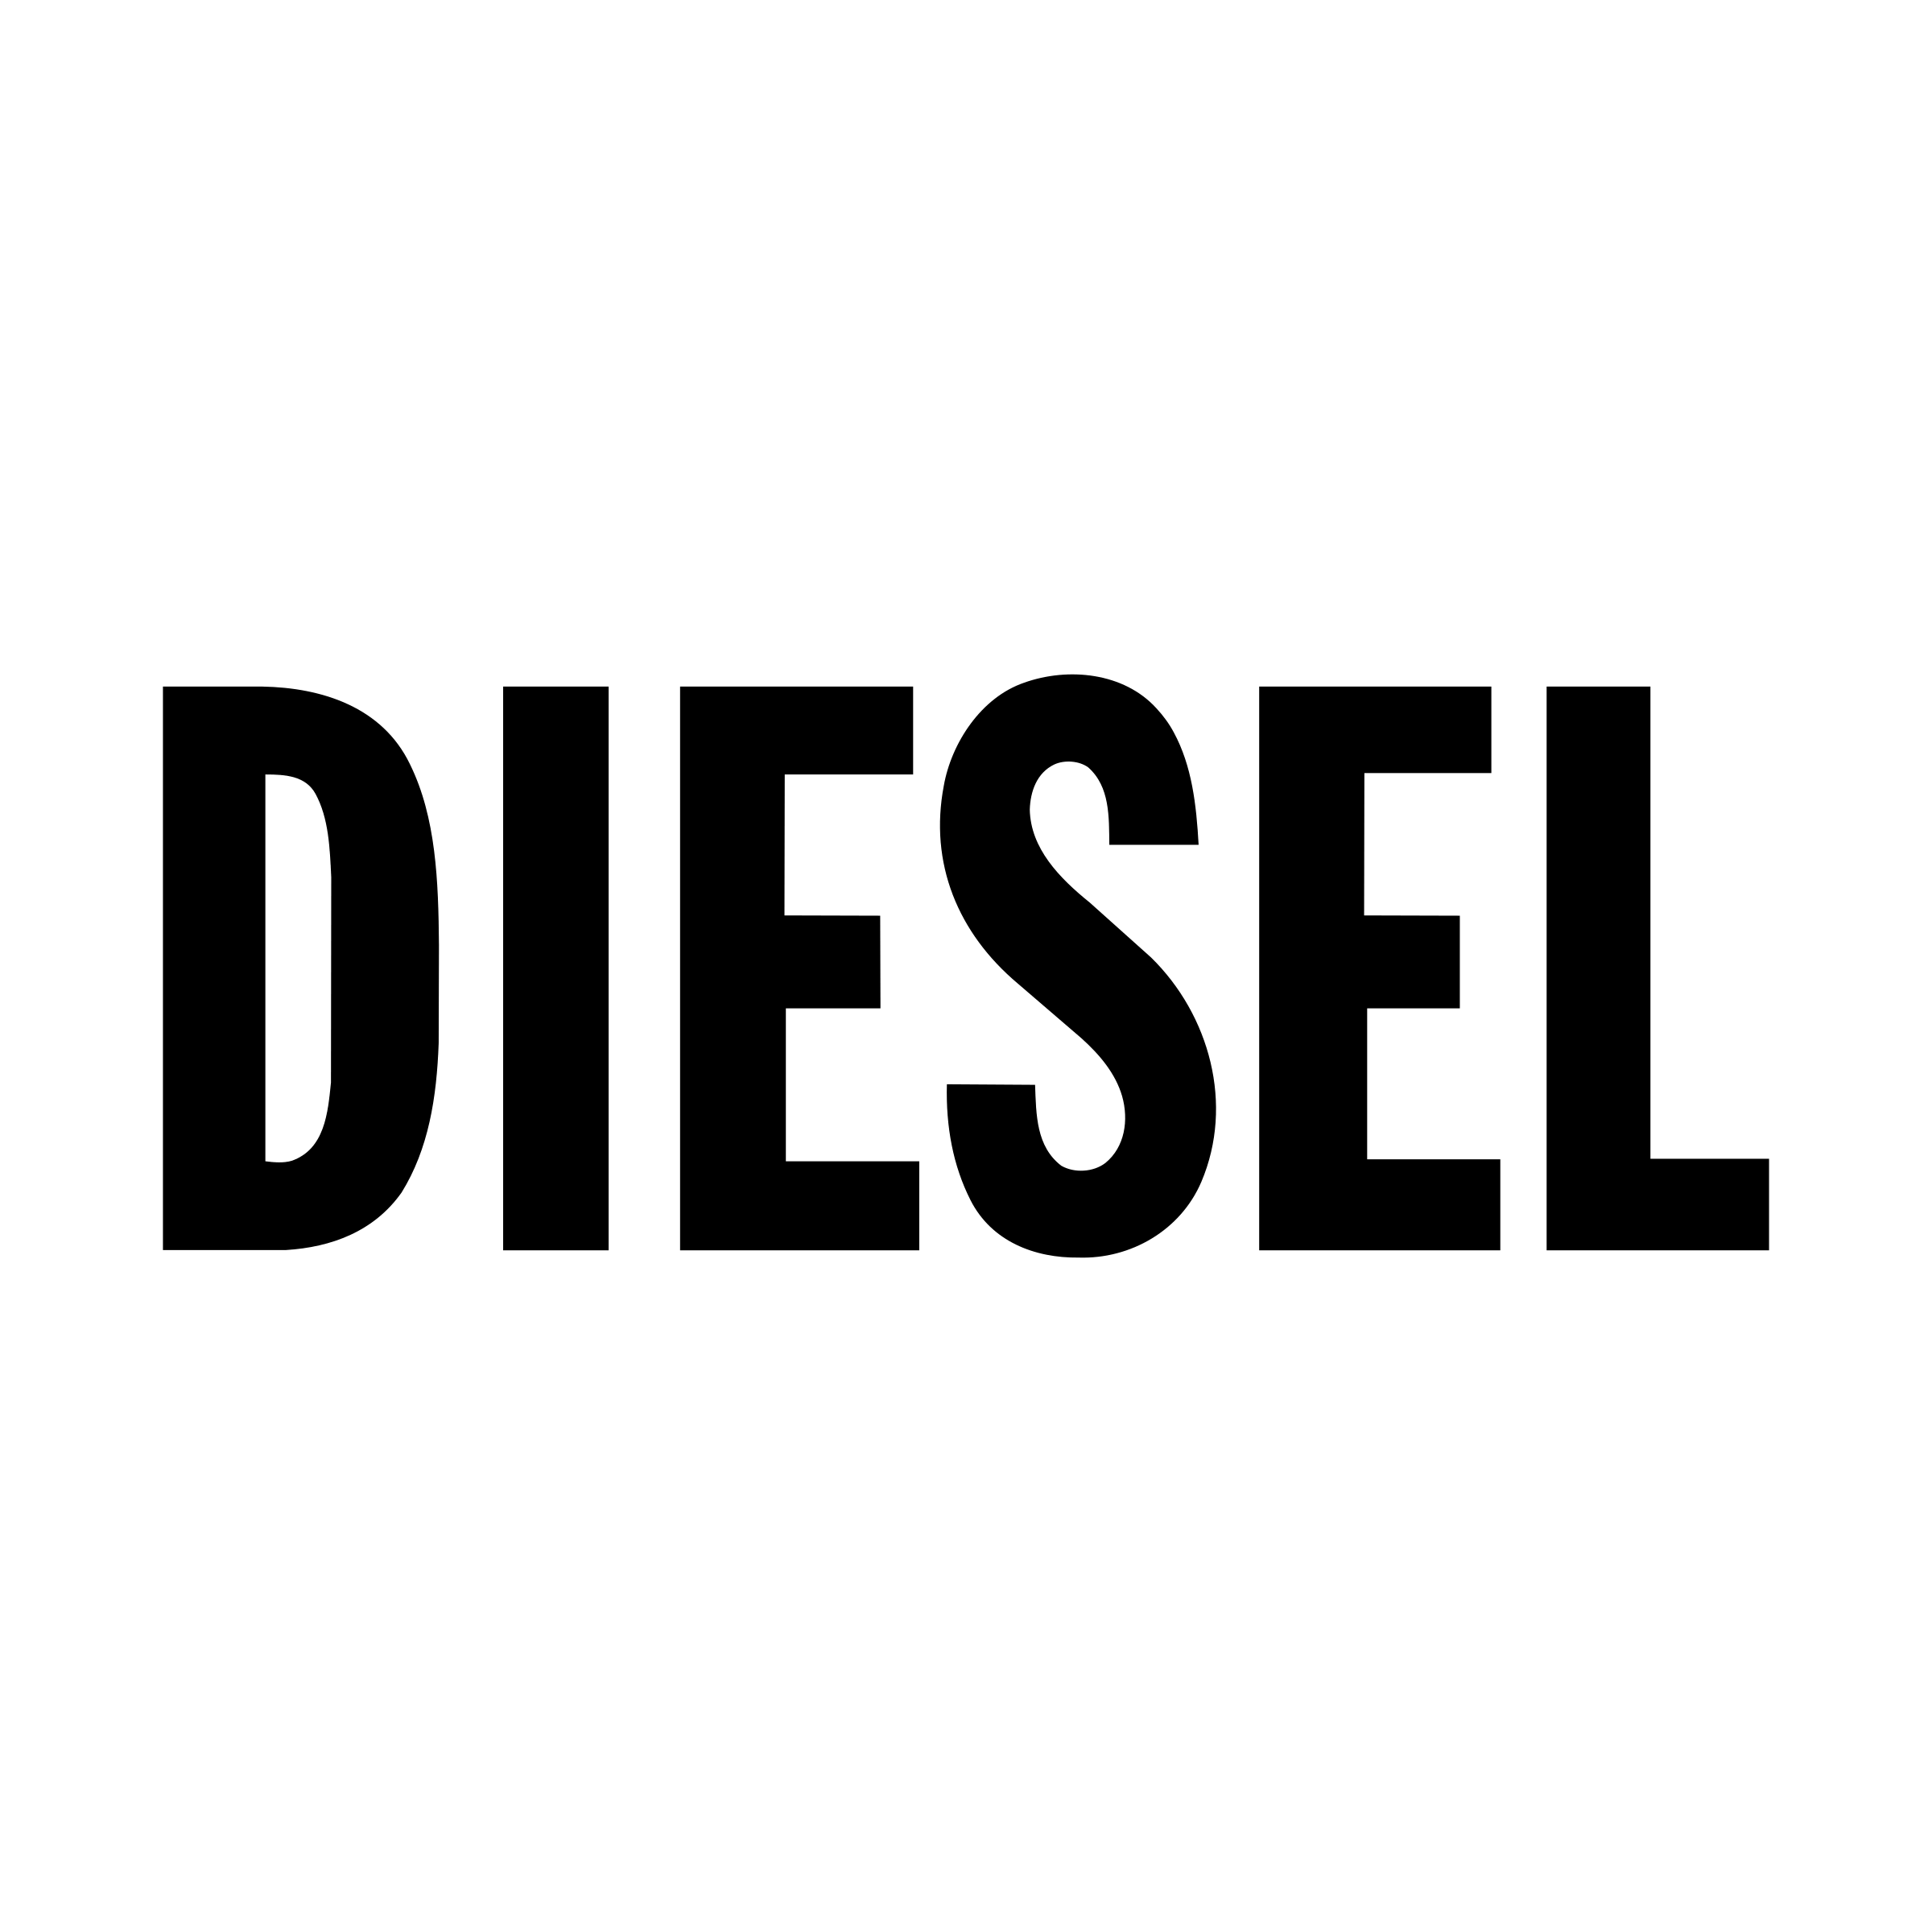 Diesel Logo - Diesel Logo PNG Transparent & SVG Vector - Freebie Supply